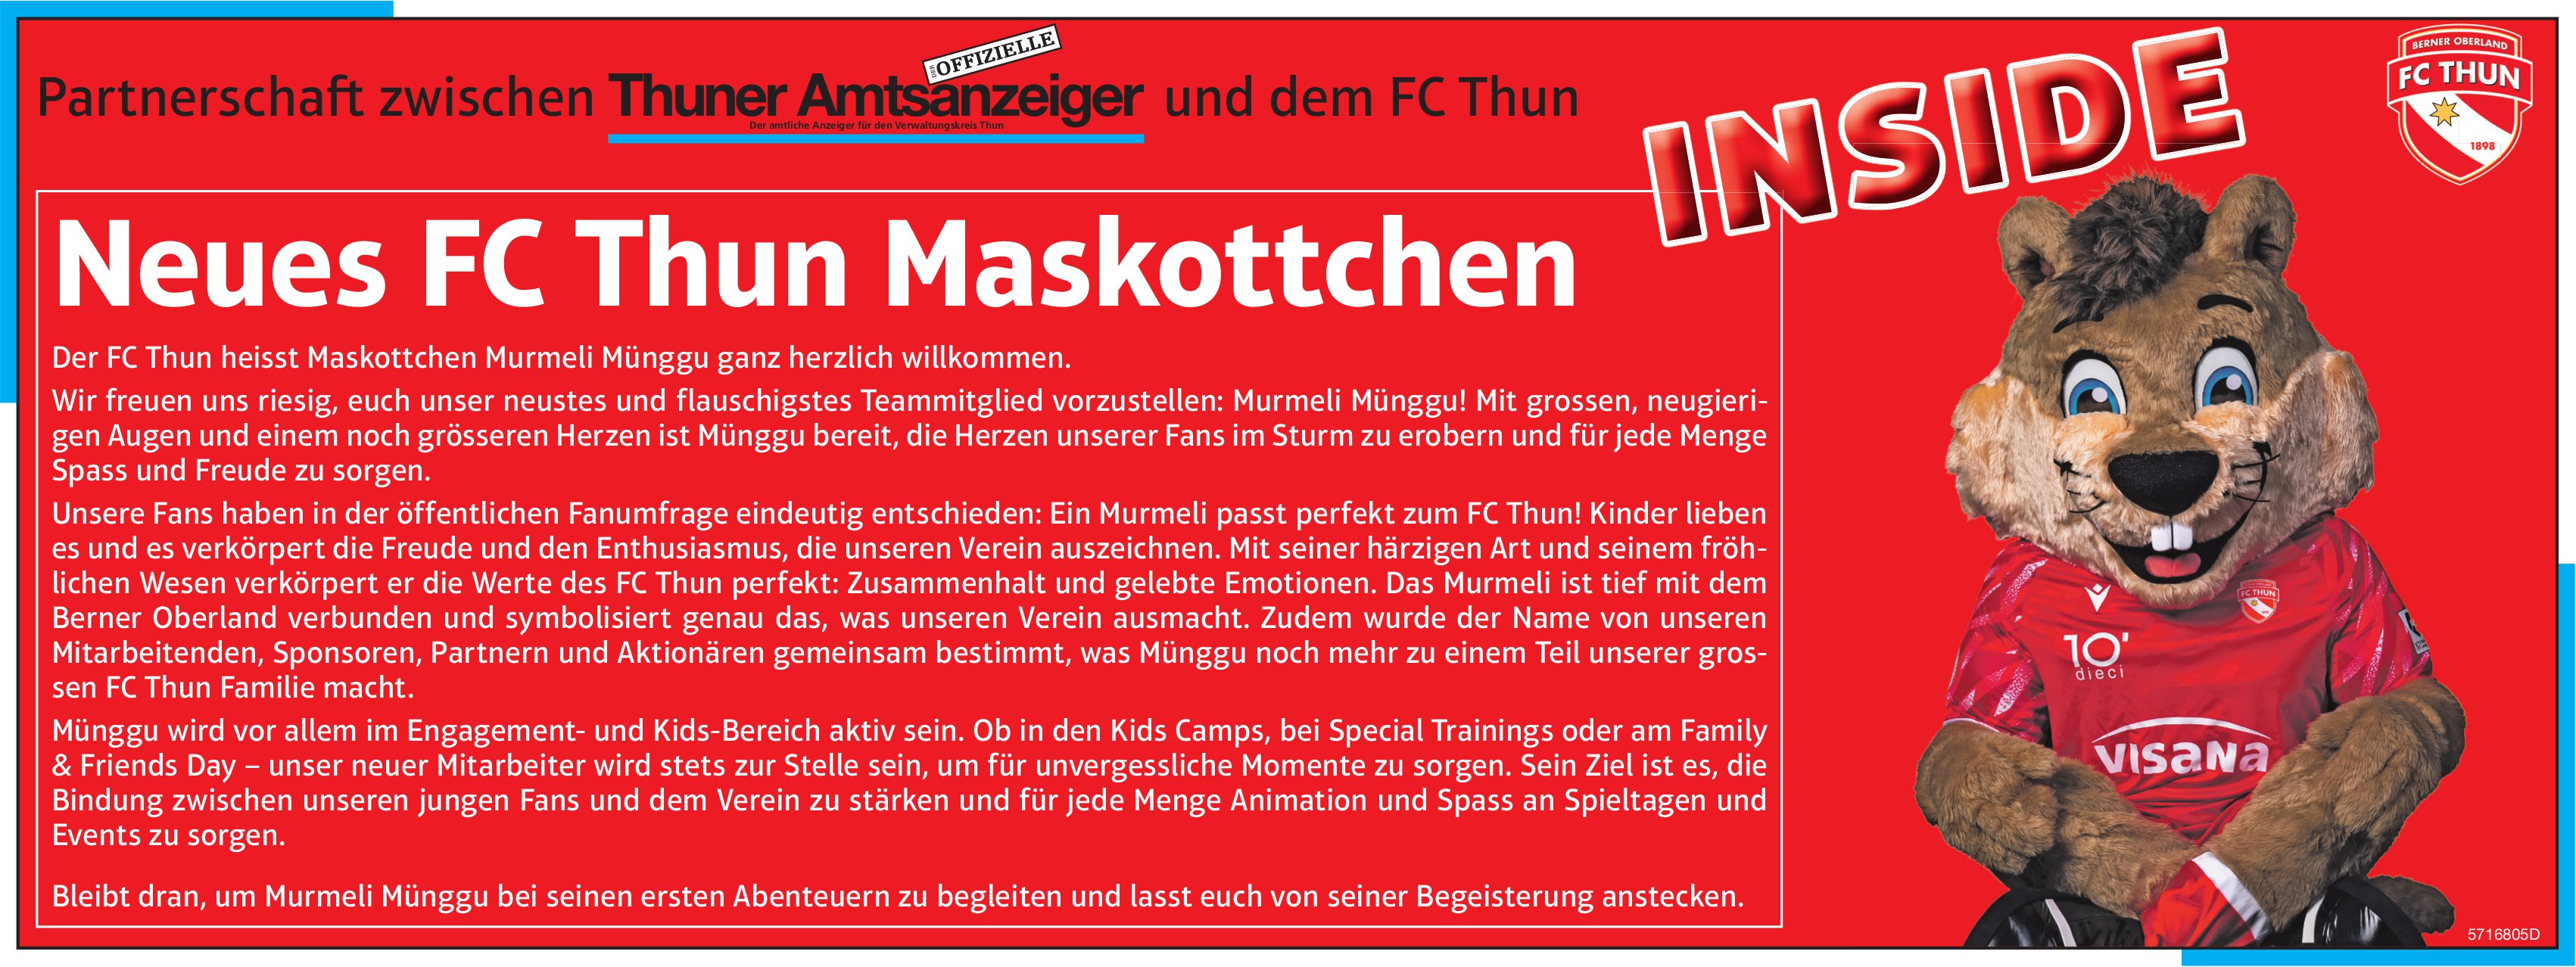 Thuner Amtsanzeiger / FC Thun, Inside: Neues FC Thun Maskottchen